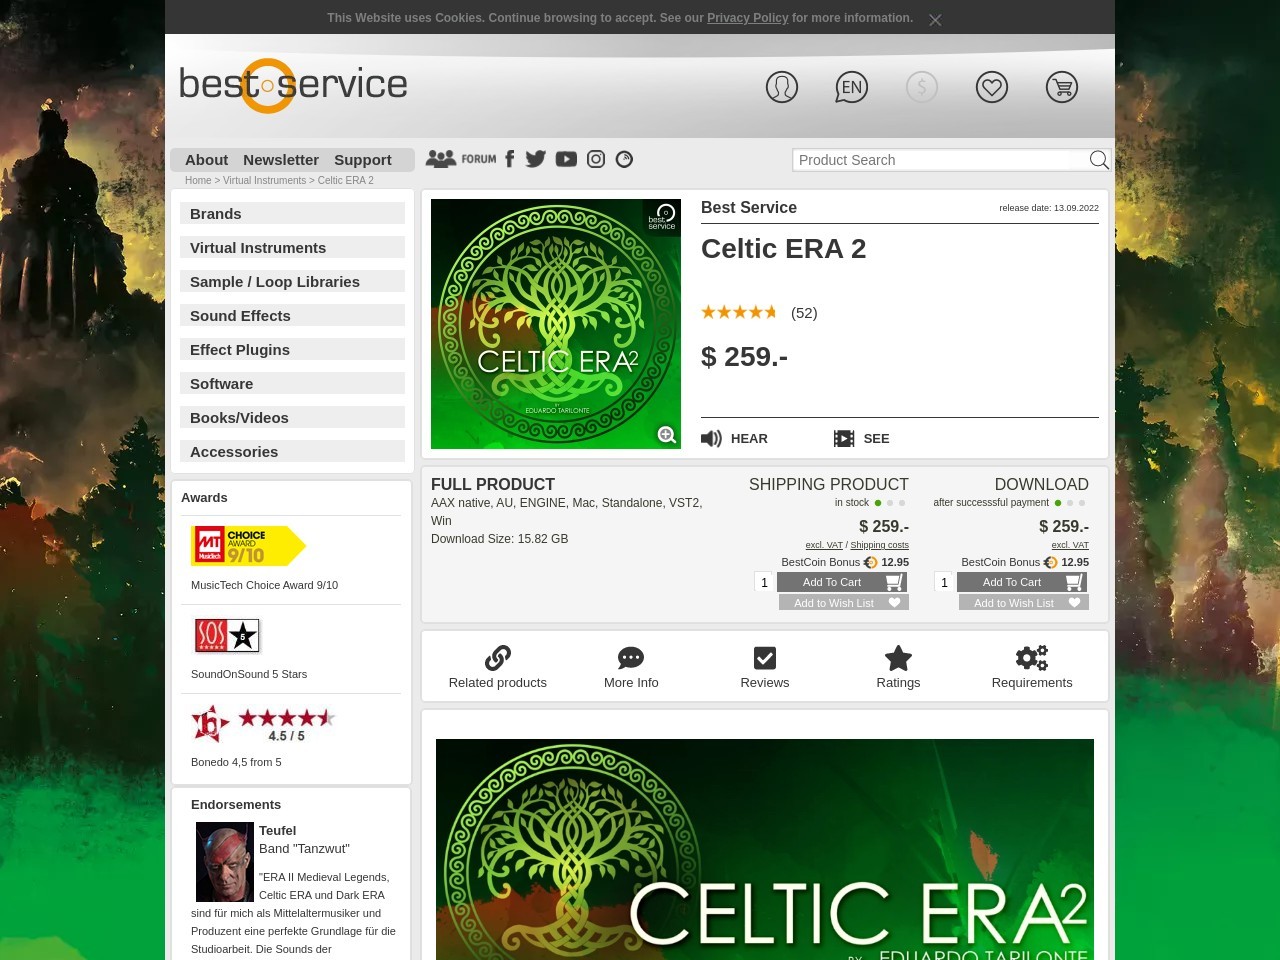 Celtic ERA 2 | Best Service | bestservice.com